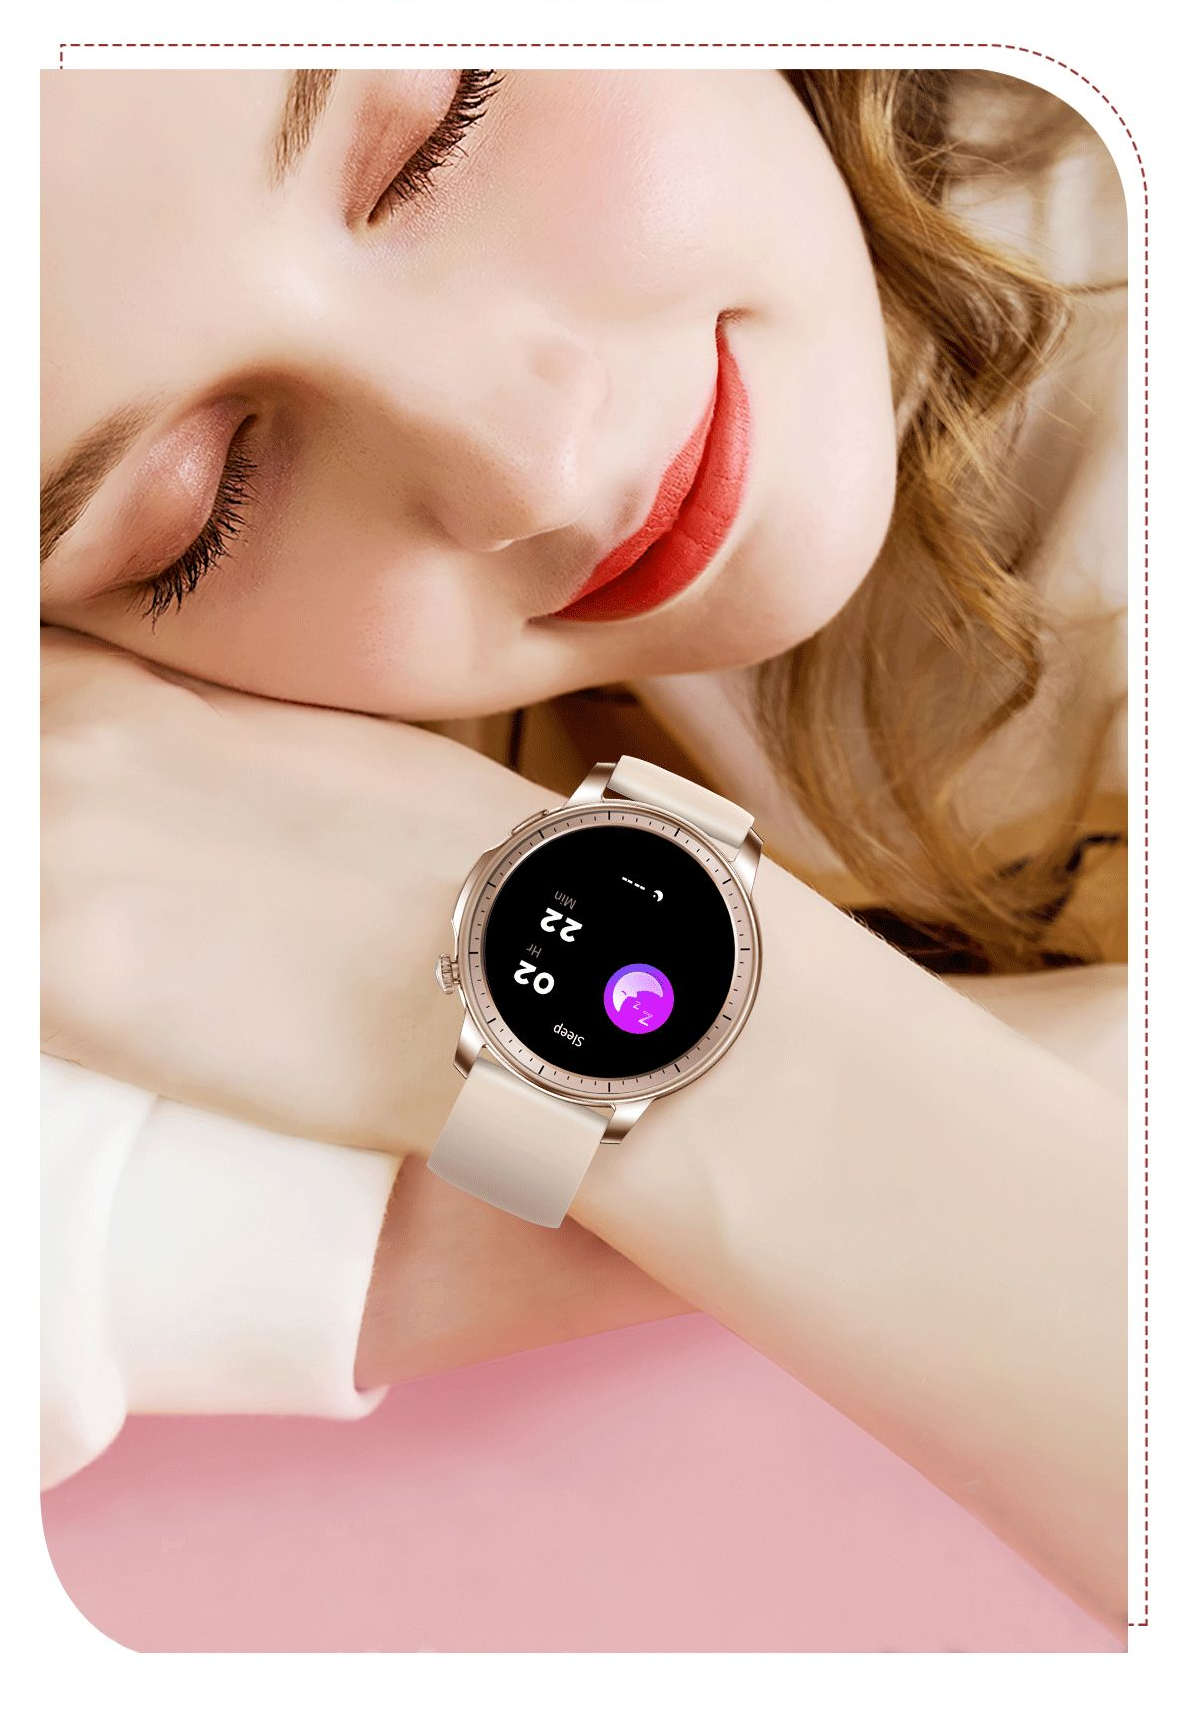 COLMI V65 Smartwatch 1.32″ AMOLED Display Fashion Unisex Smart Watch għan-nisa